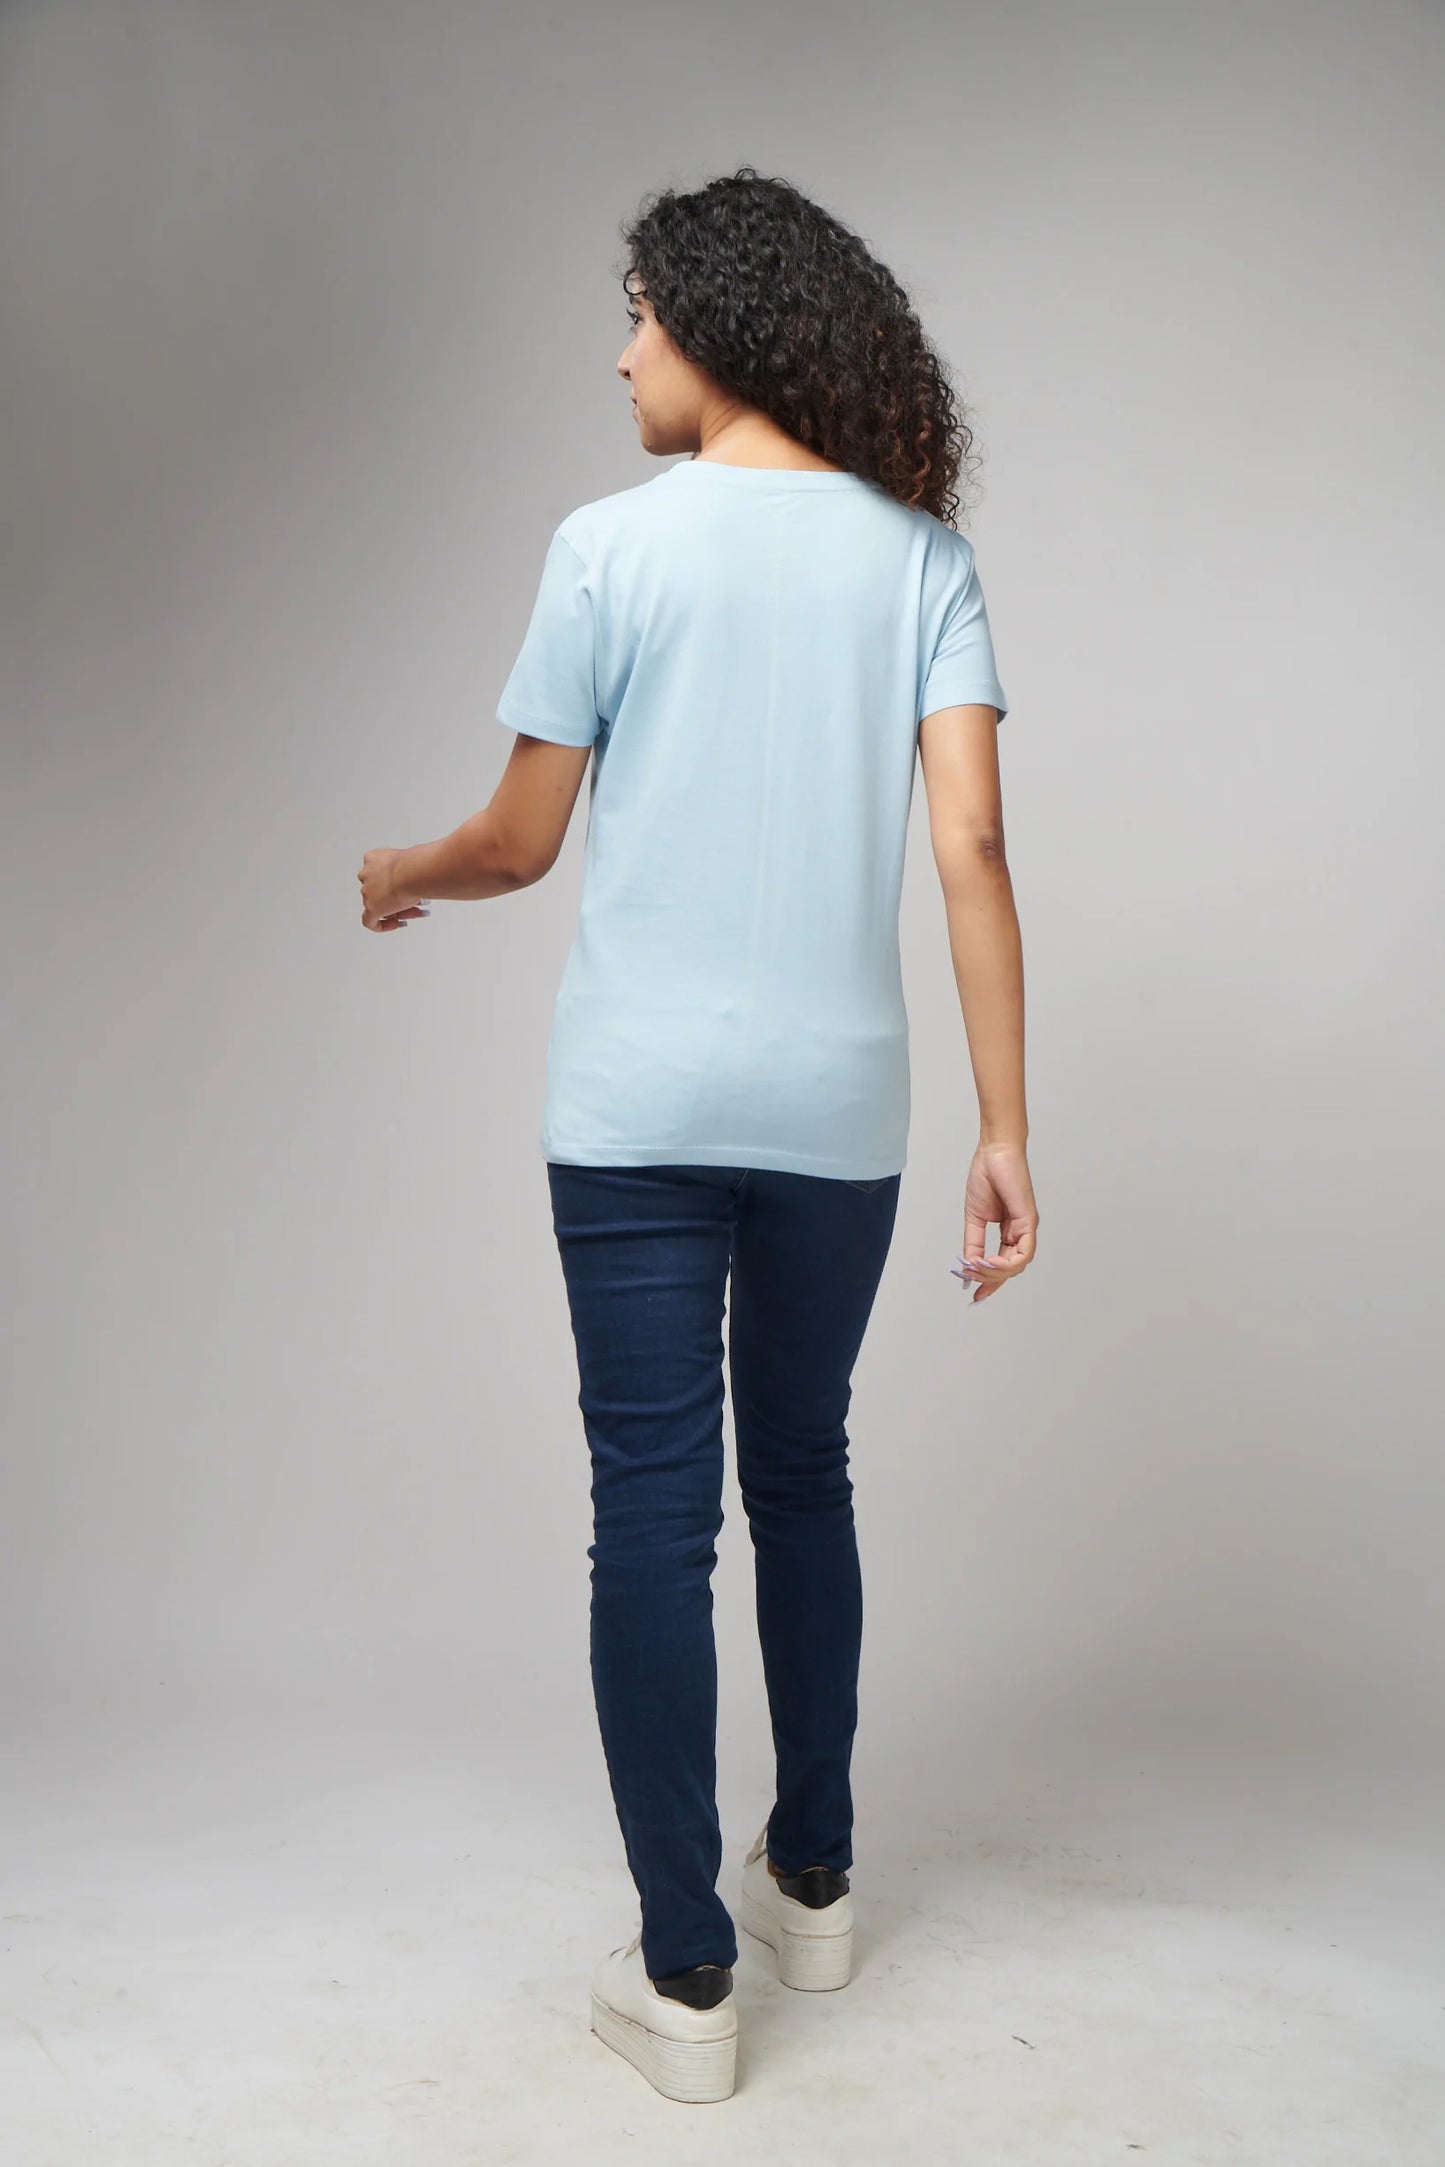 Women's Basic Sky Blue Half Sleeves T-Shirt